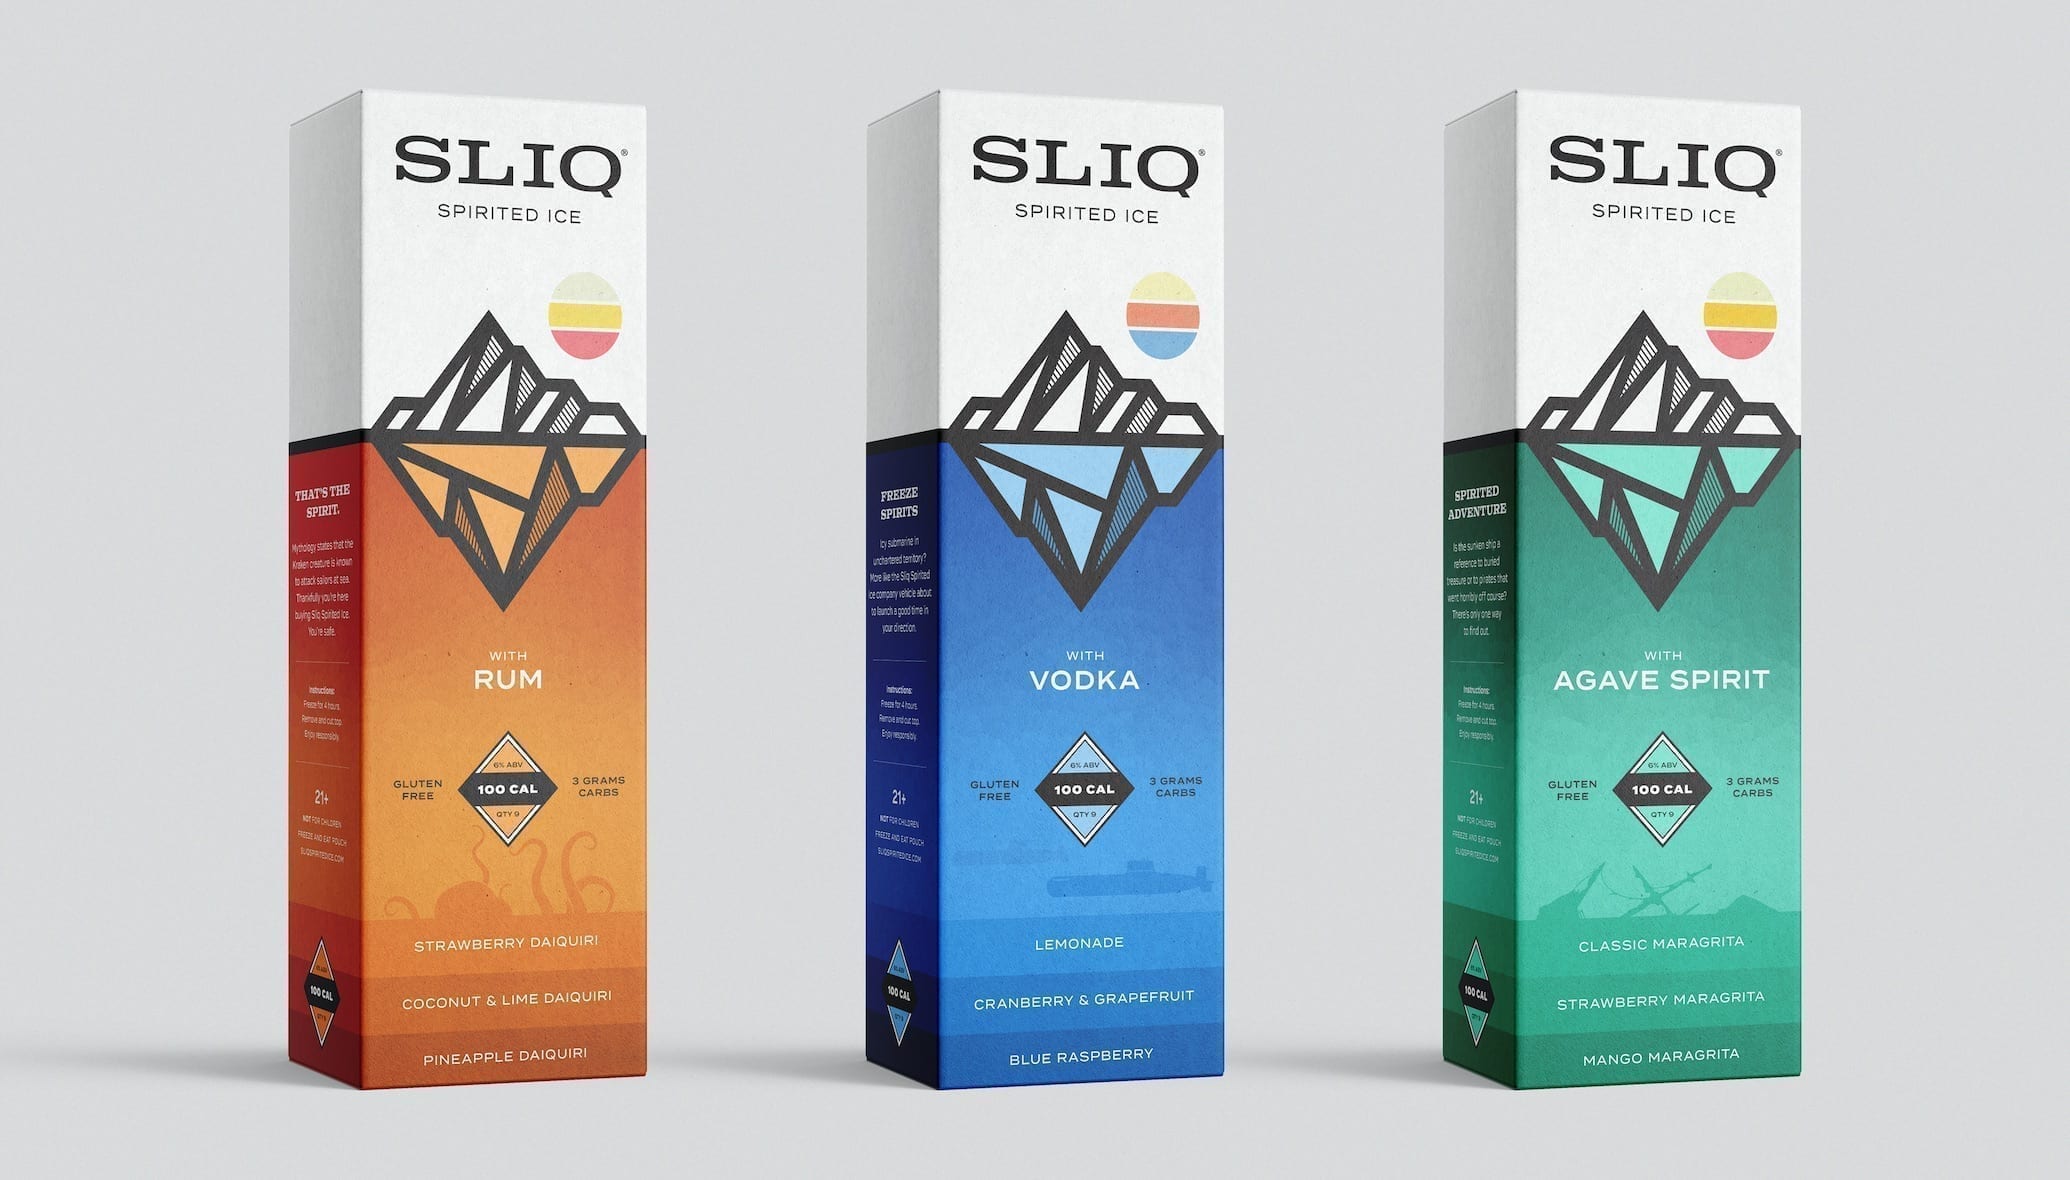 Agency Squid Launches Sliq Spirited Ice - The Minneapolis EgotistThe Minneapolis Egotist